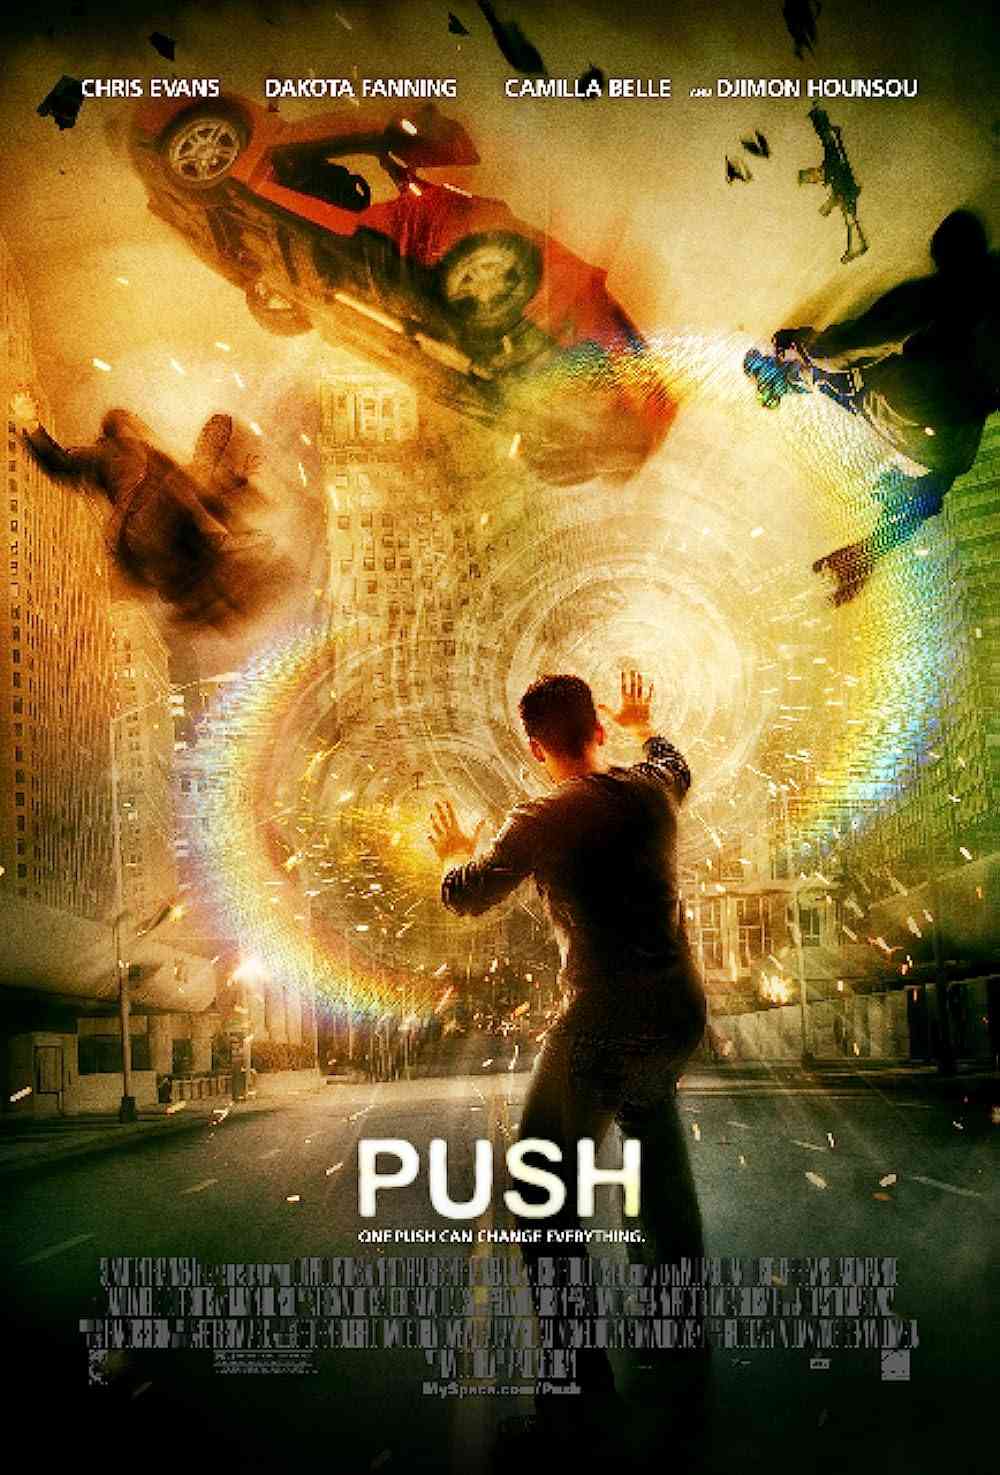 FULL MOVIE: Push (2009) [Action]